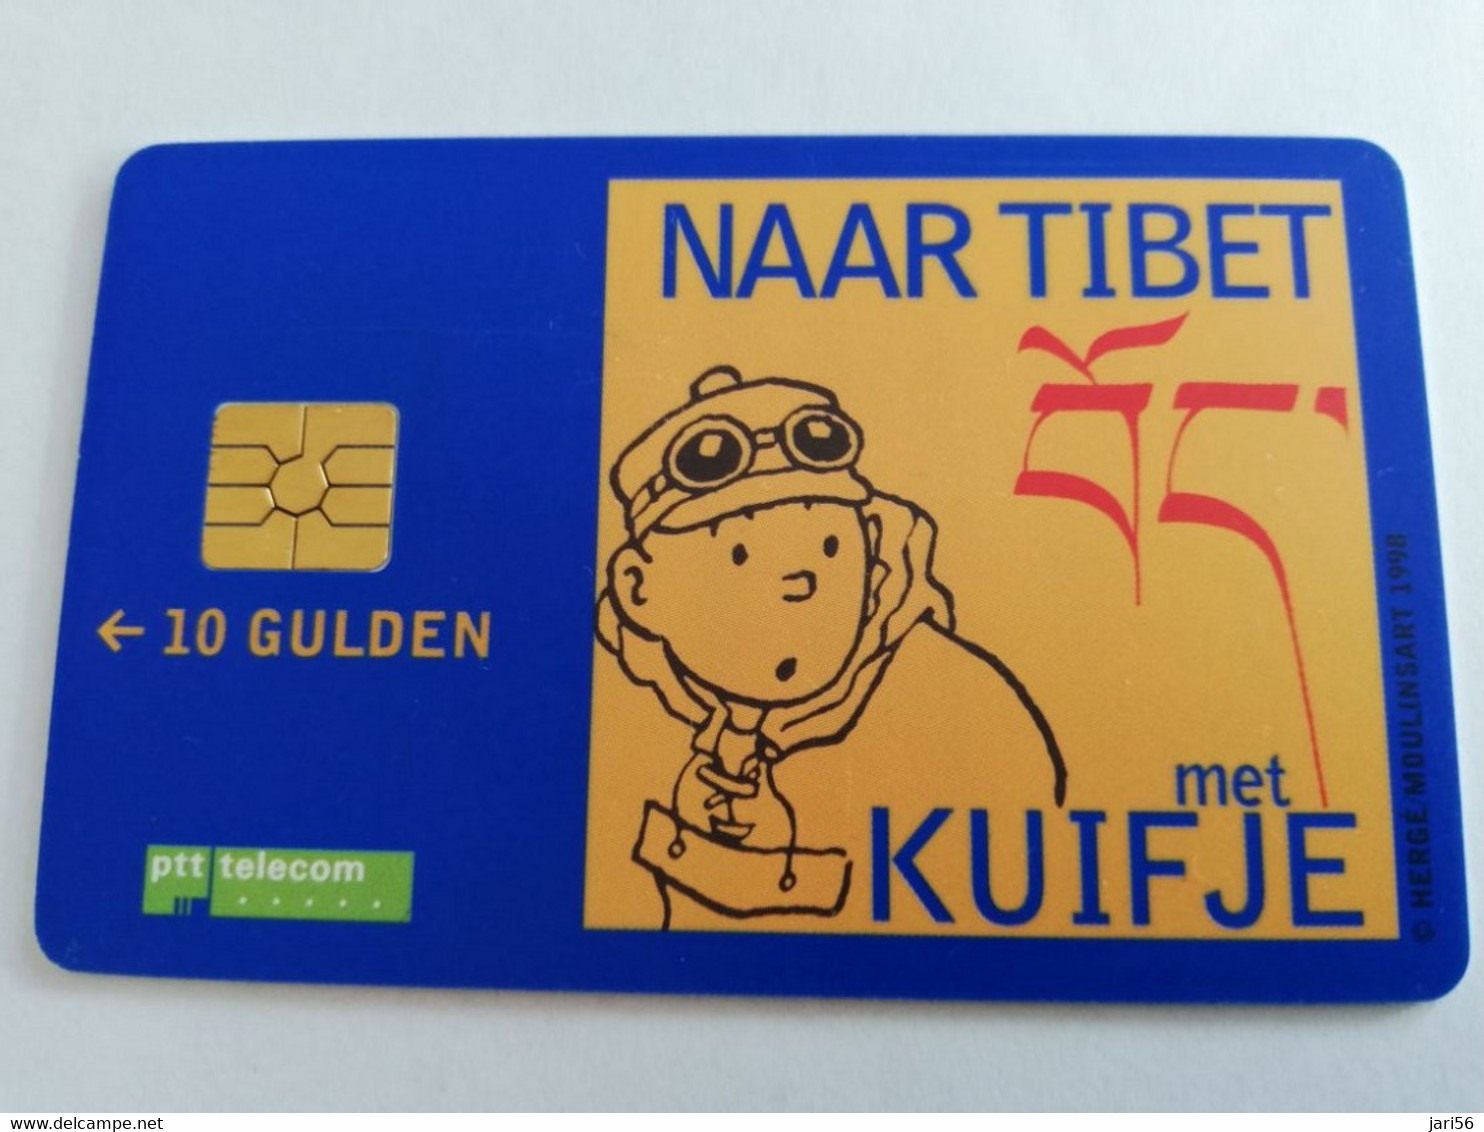 NETHERLANDS CHIPCARD  HFL 10,00  COMIC / TIN TIN / KUIFJE NAAR TIBET /  Used Card  ** 10239 ** - öffentlich